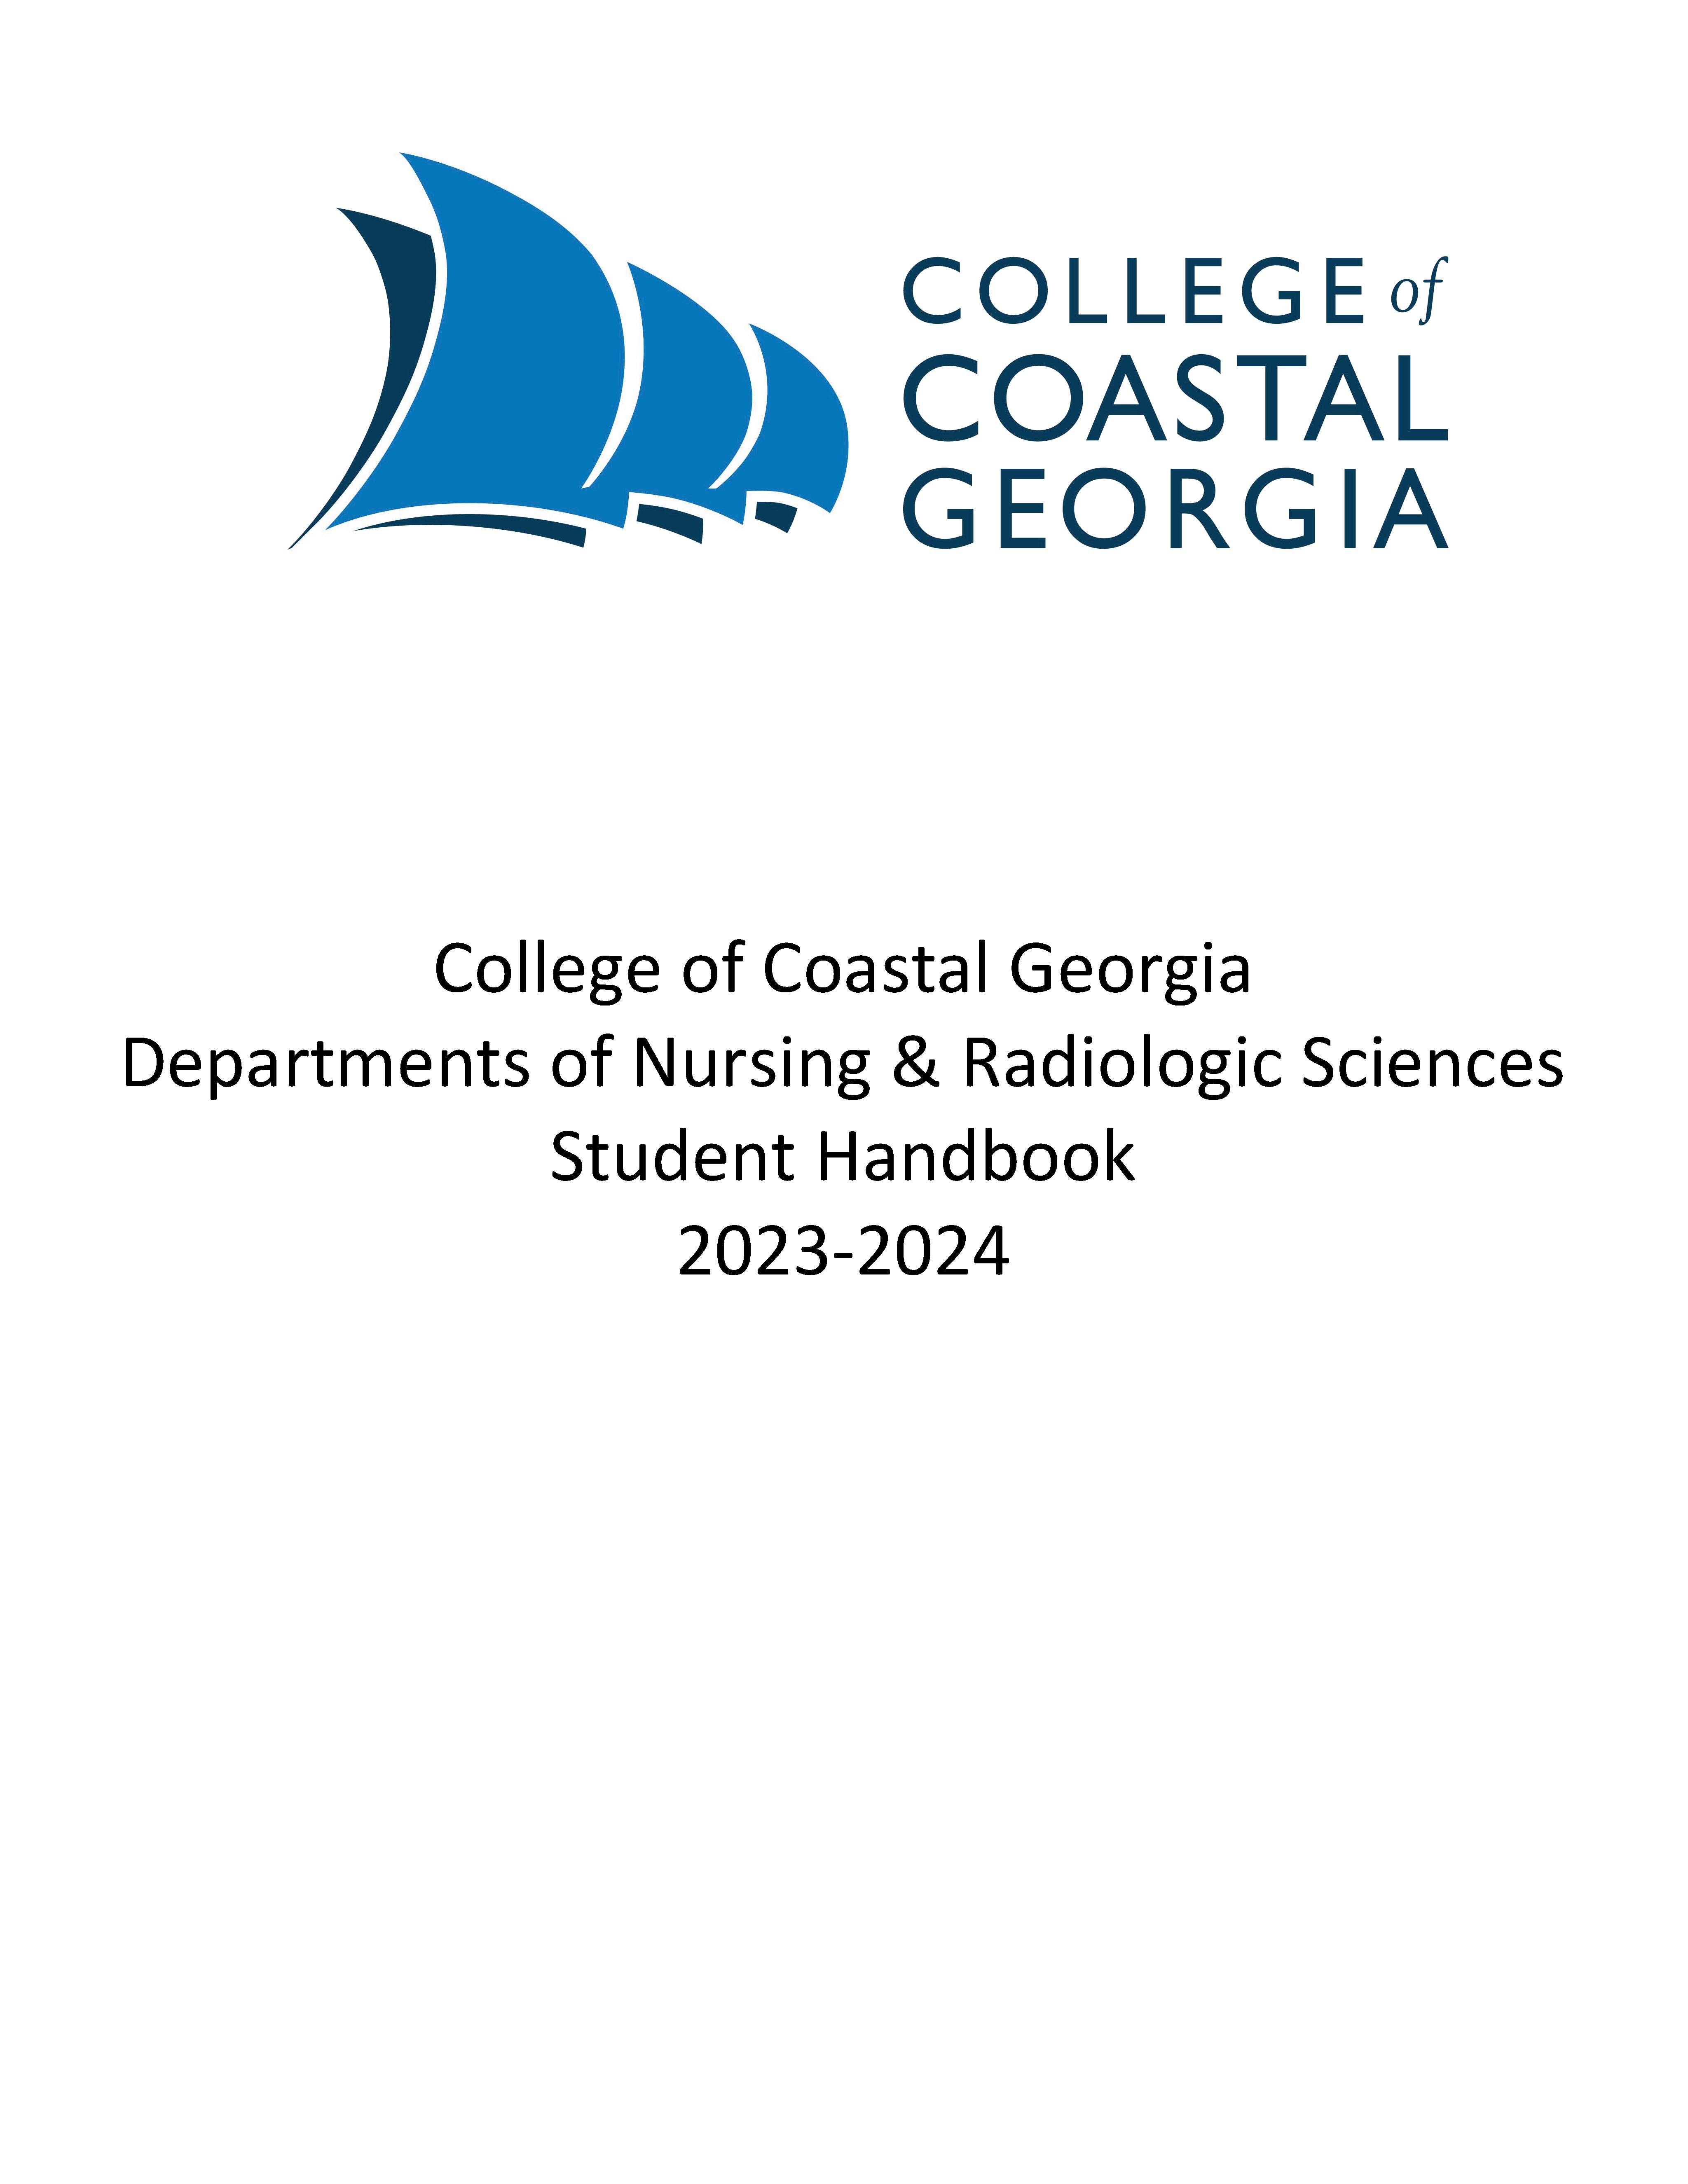 Department of Nursing & Radiologic Sciences Student Handbook 2023-2024 PNG